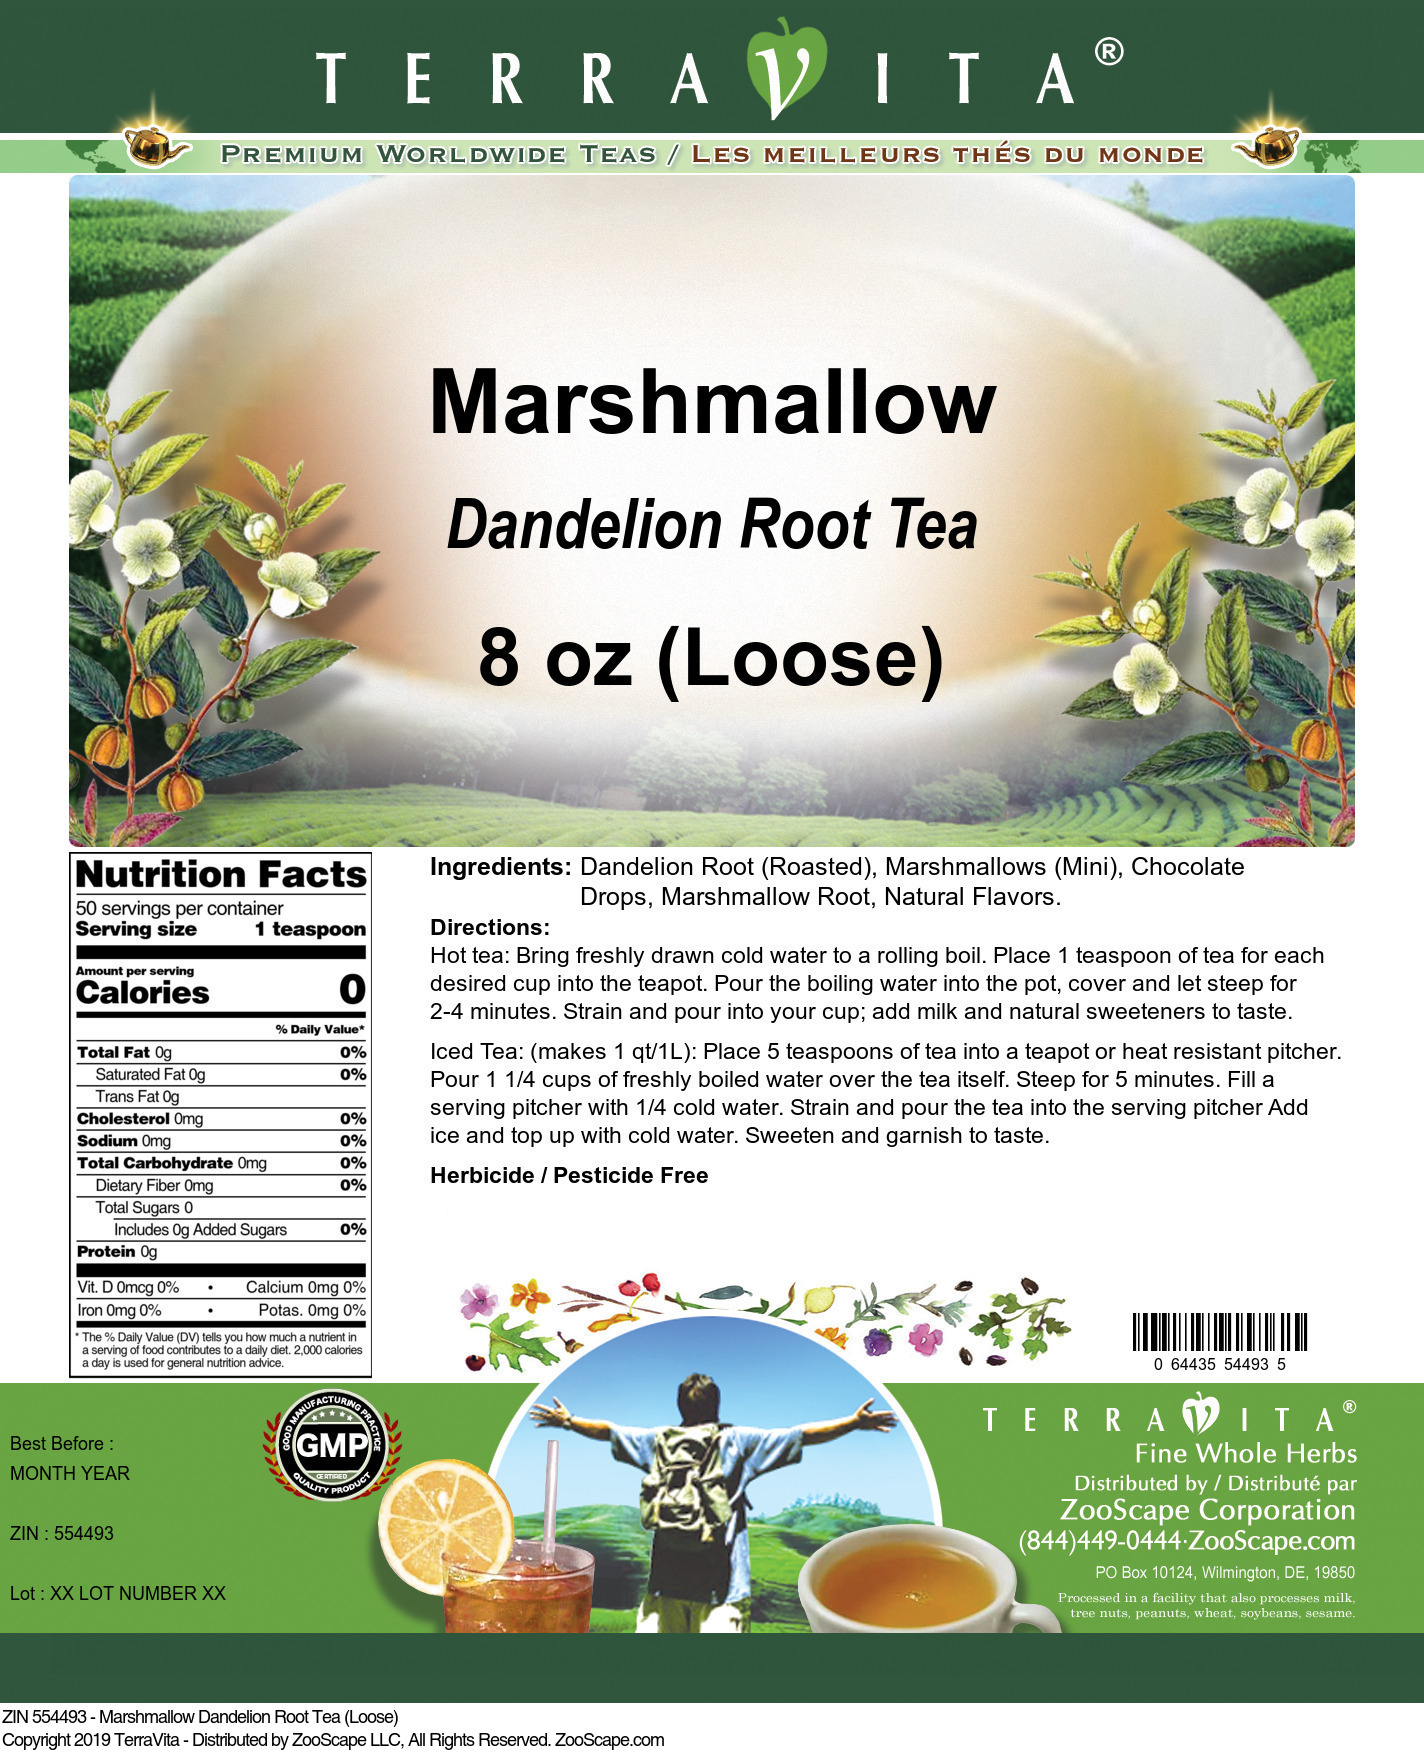 Marshmallow Dandelion Root Tea (Loose) - Label